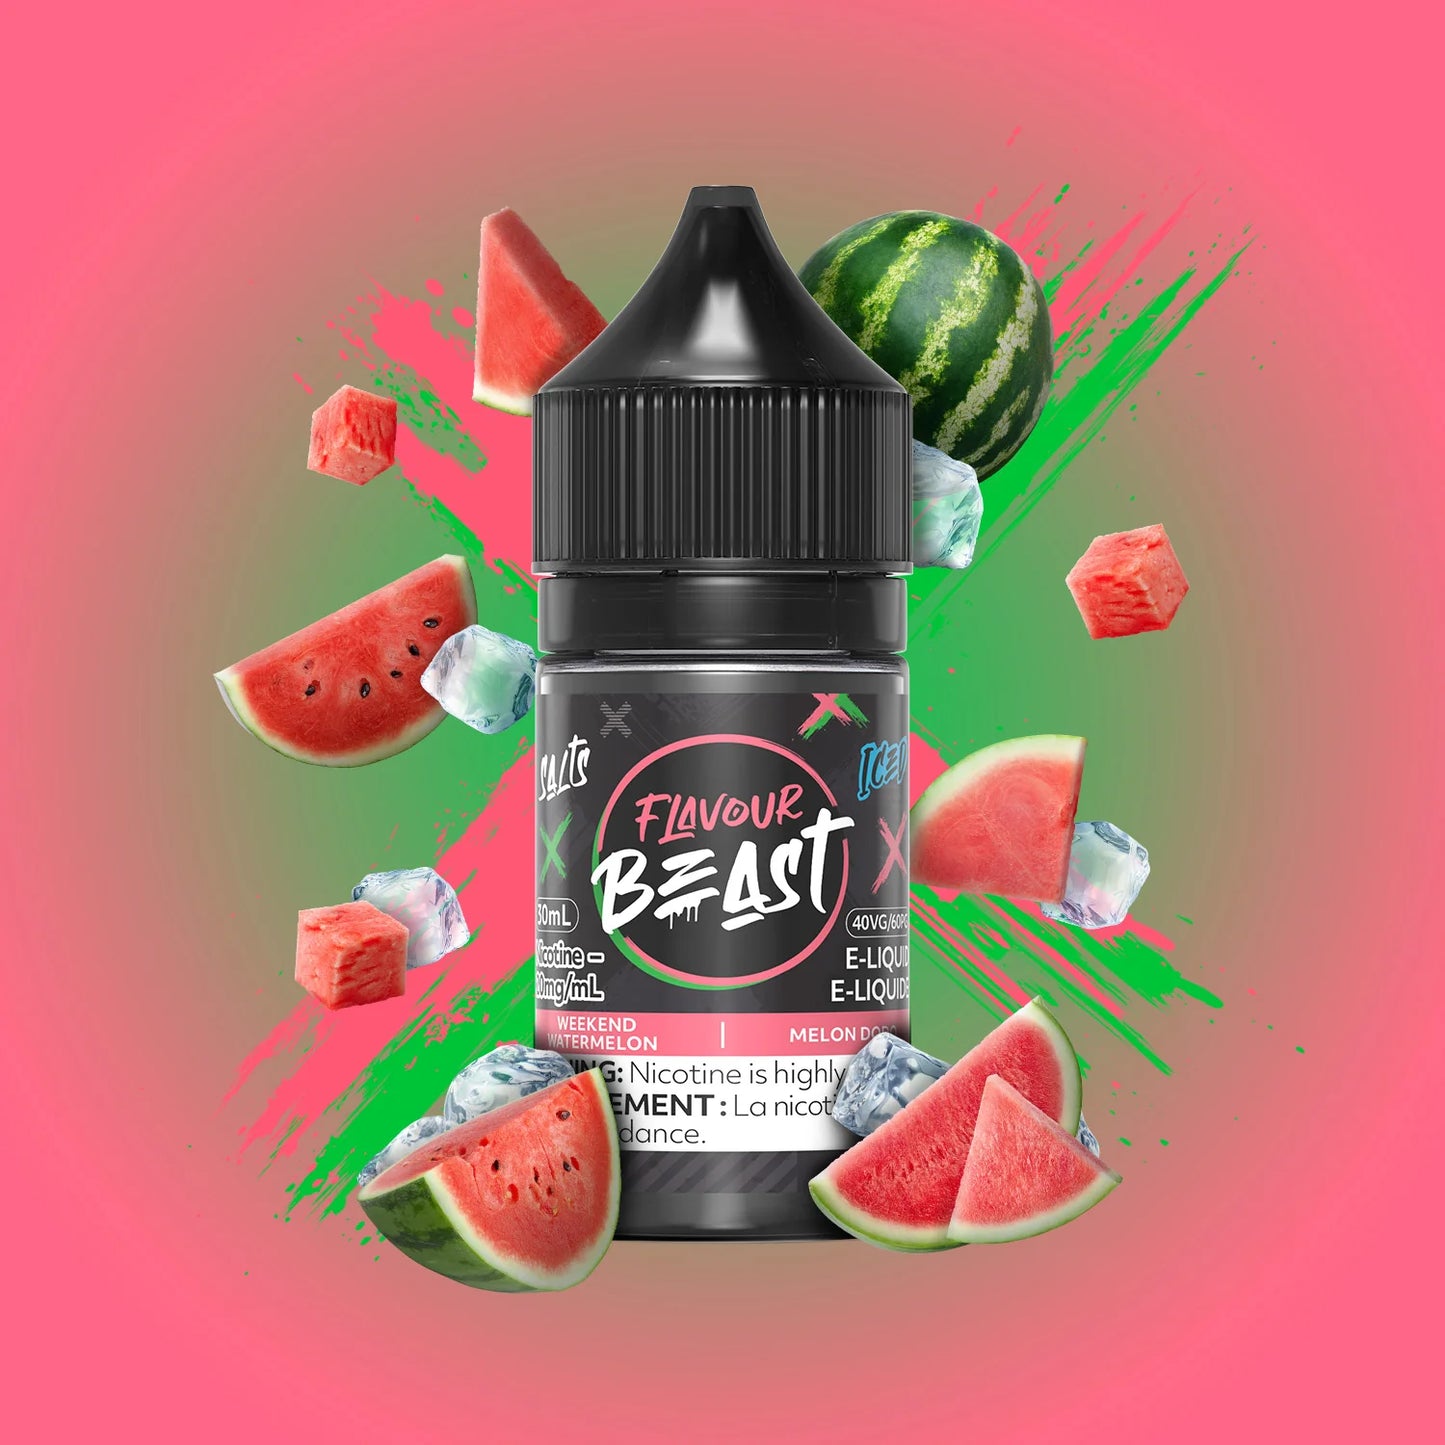 Flavour Beast- Weekend Watermelon Iced